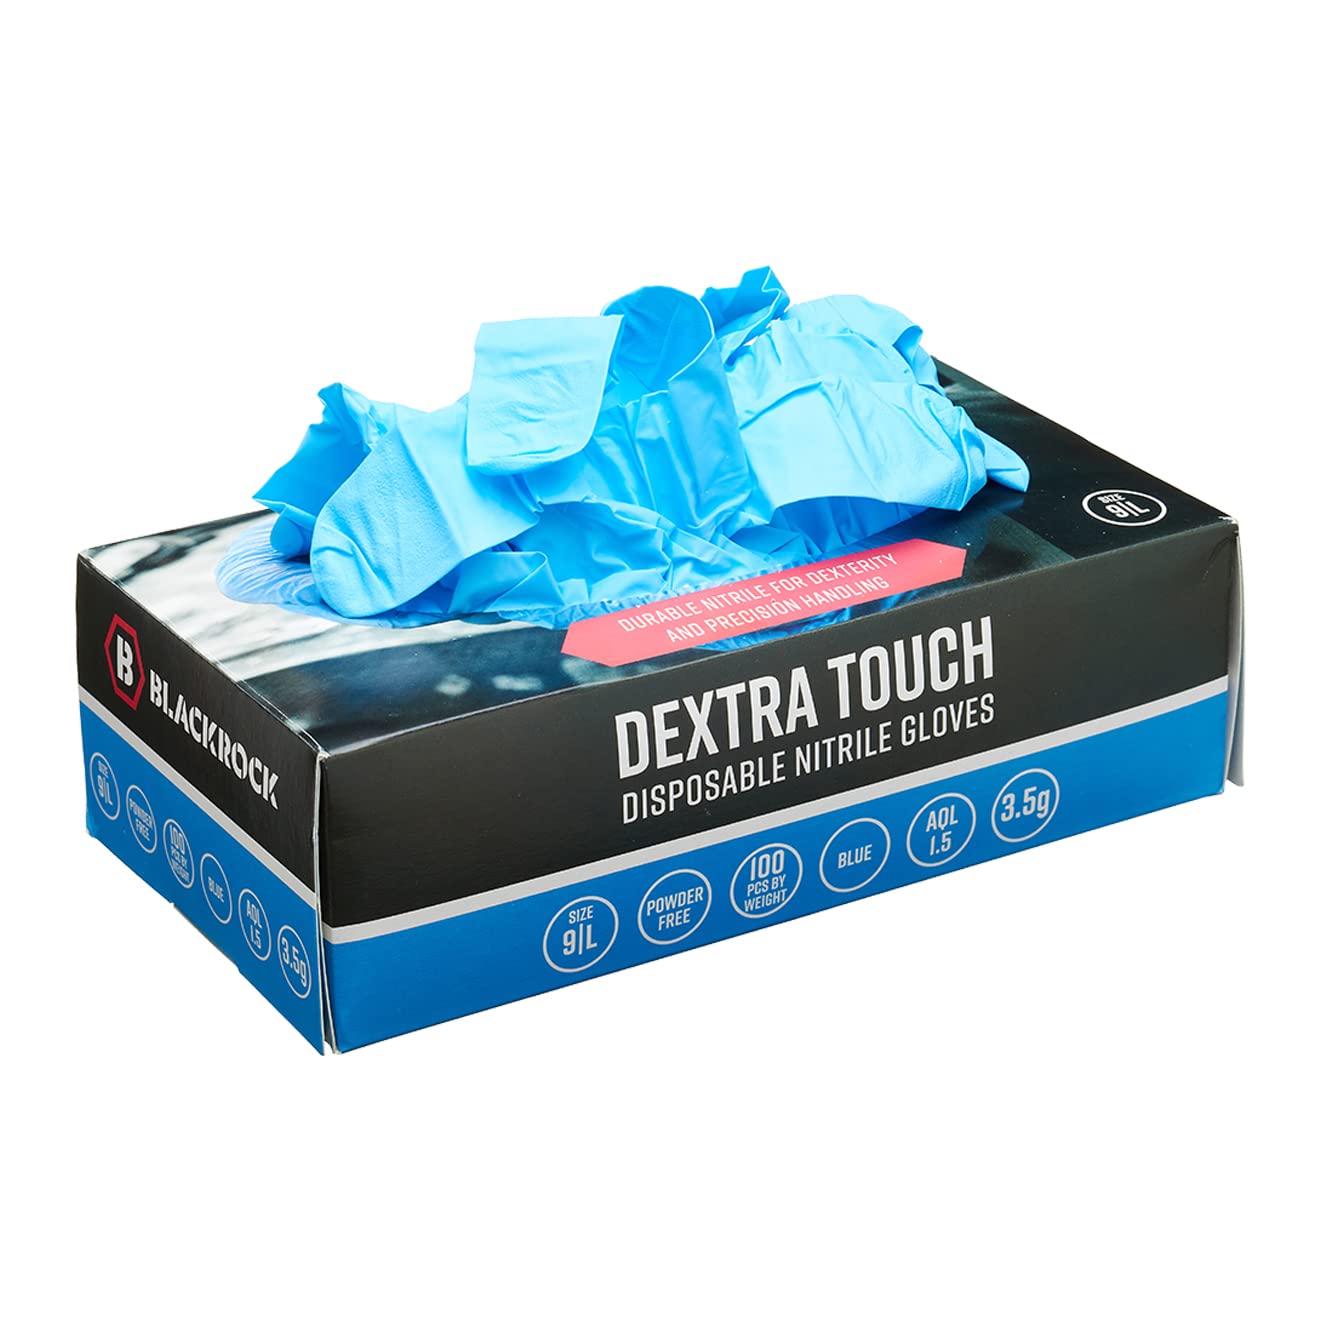 Blackrock Dextra Touch Disposable Nitrile Gloves Large (100)